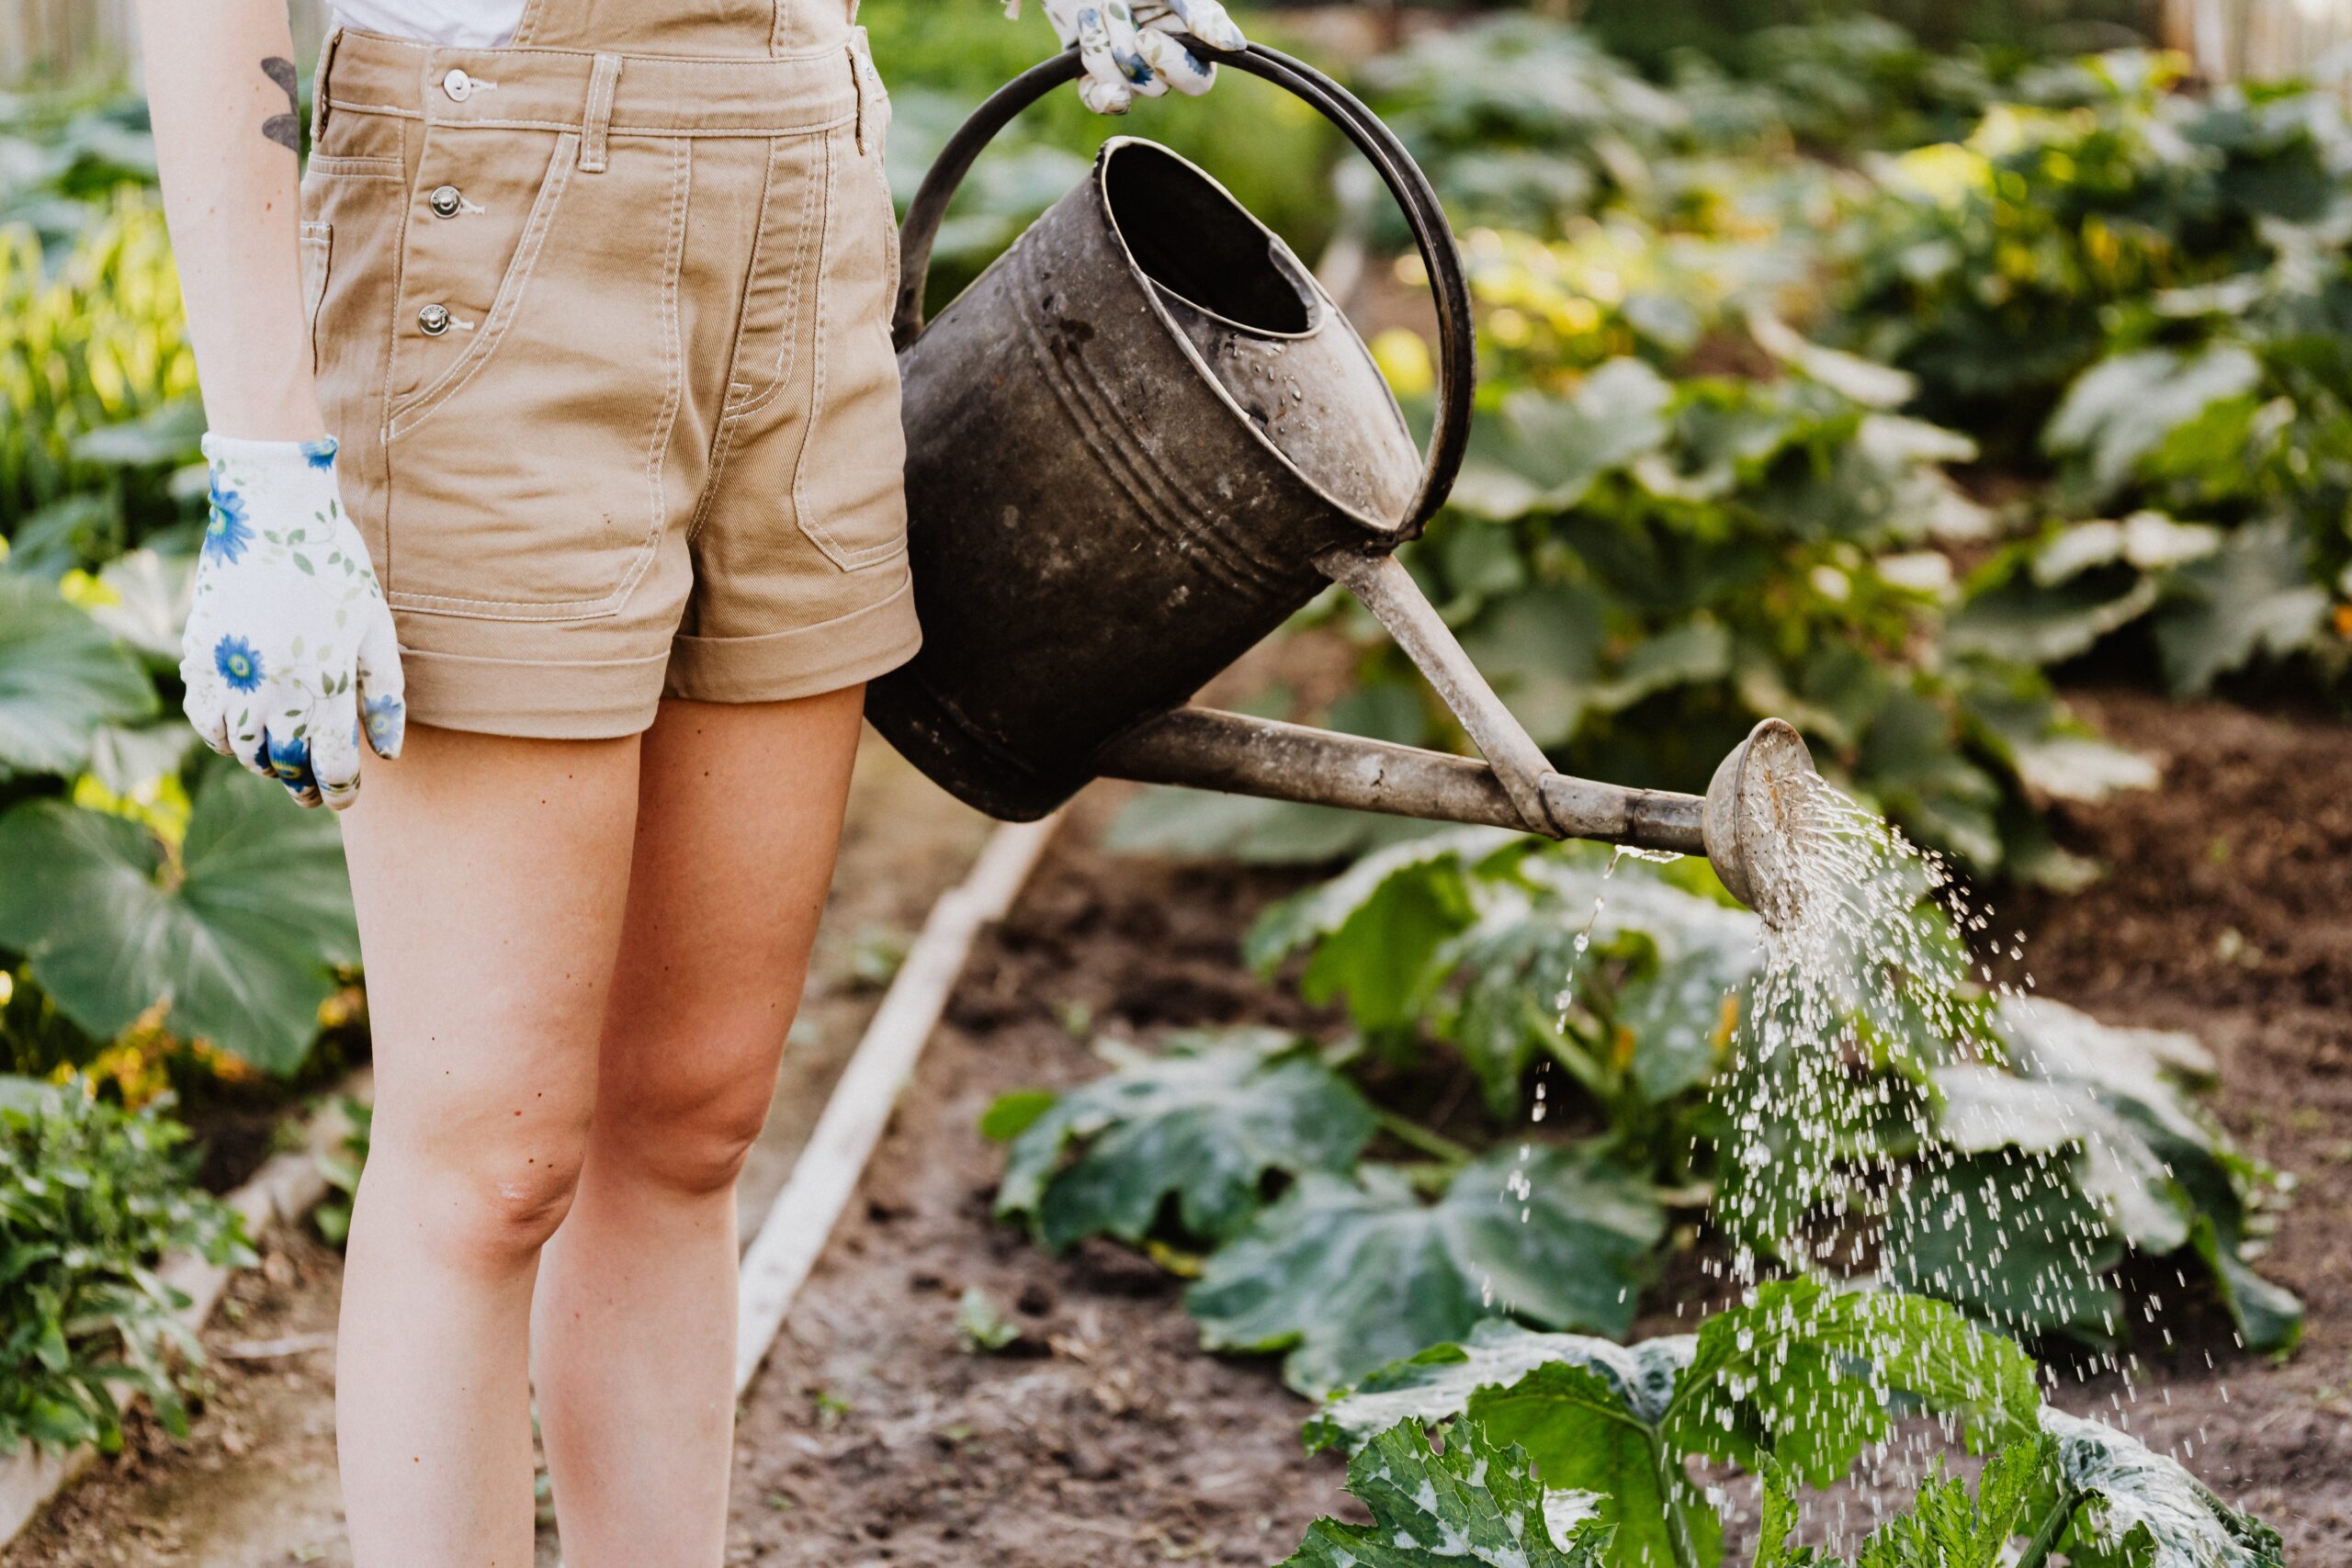 Woman in shorts watering garden